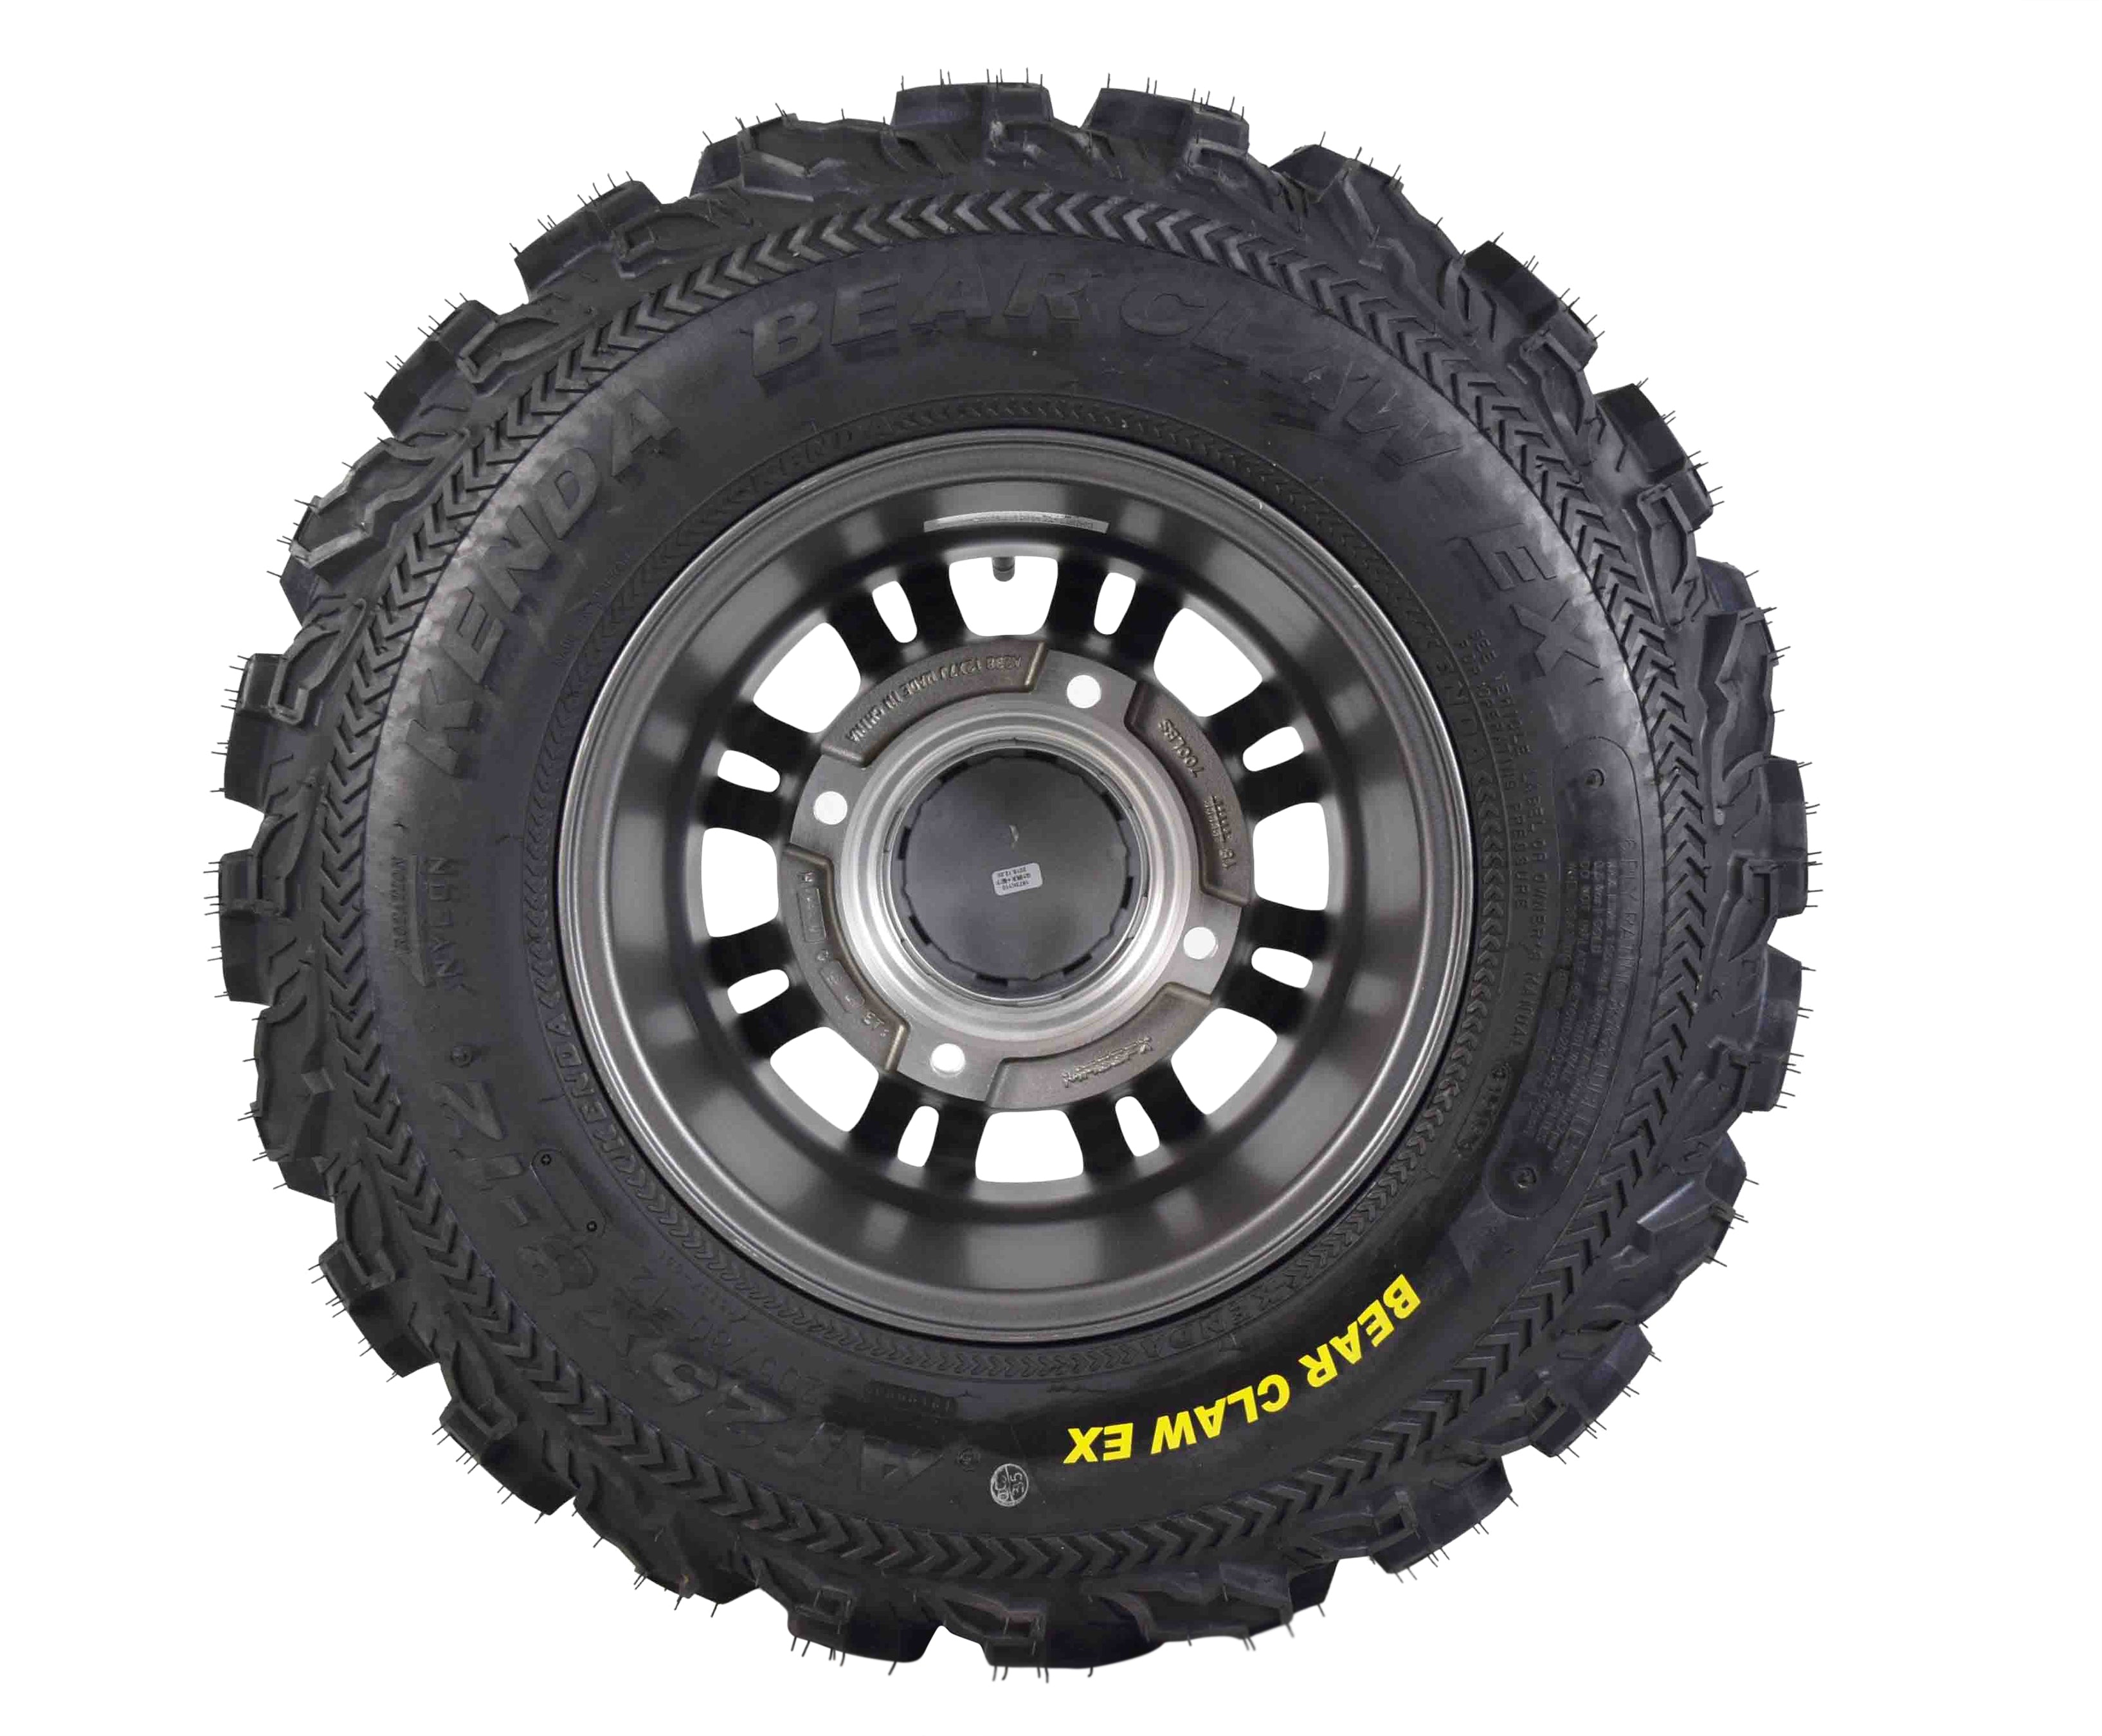 Kenda Bear Claw EX 25x8-12 25x10-12 Gunmetal 12x7 4/156 Rim Wheel & Tire Kit